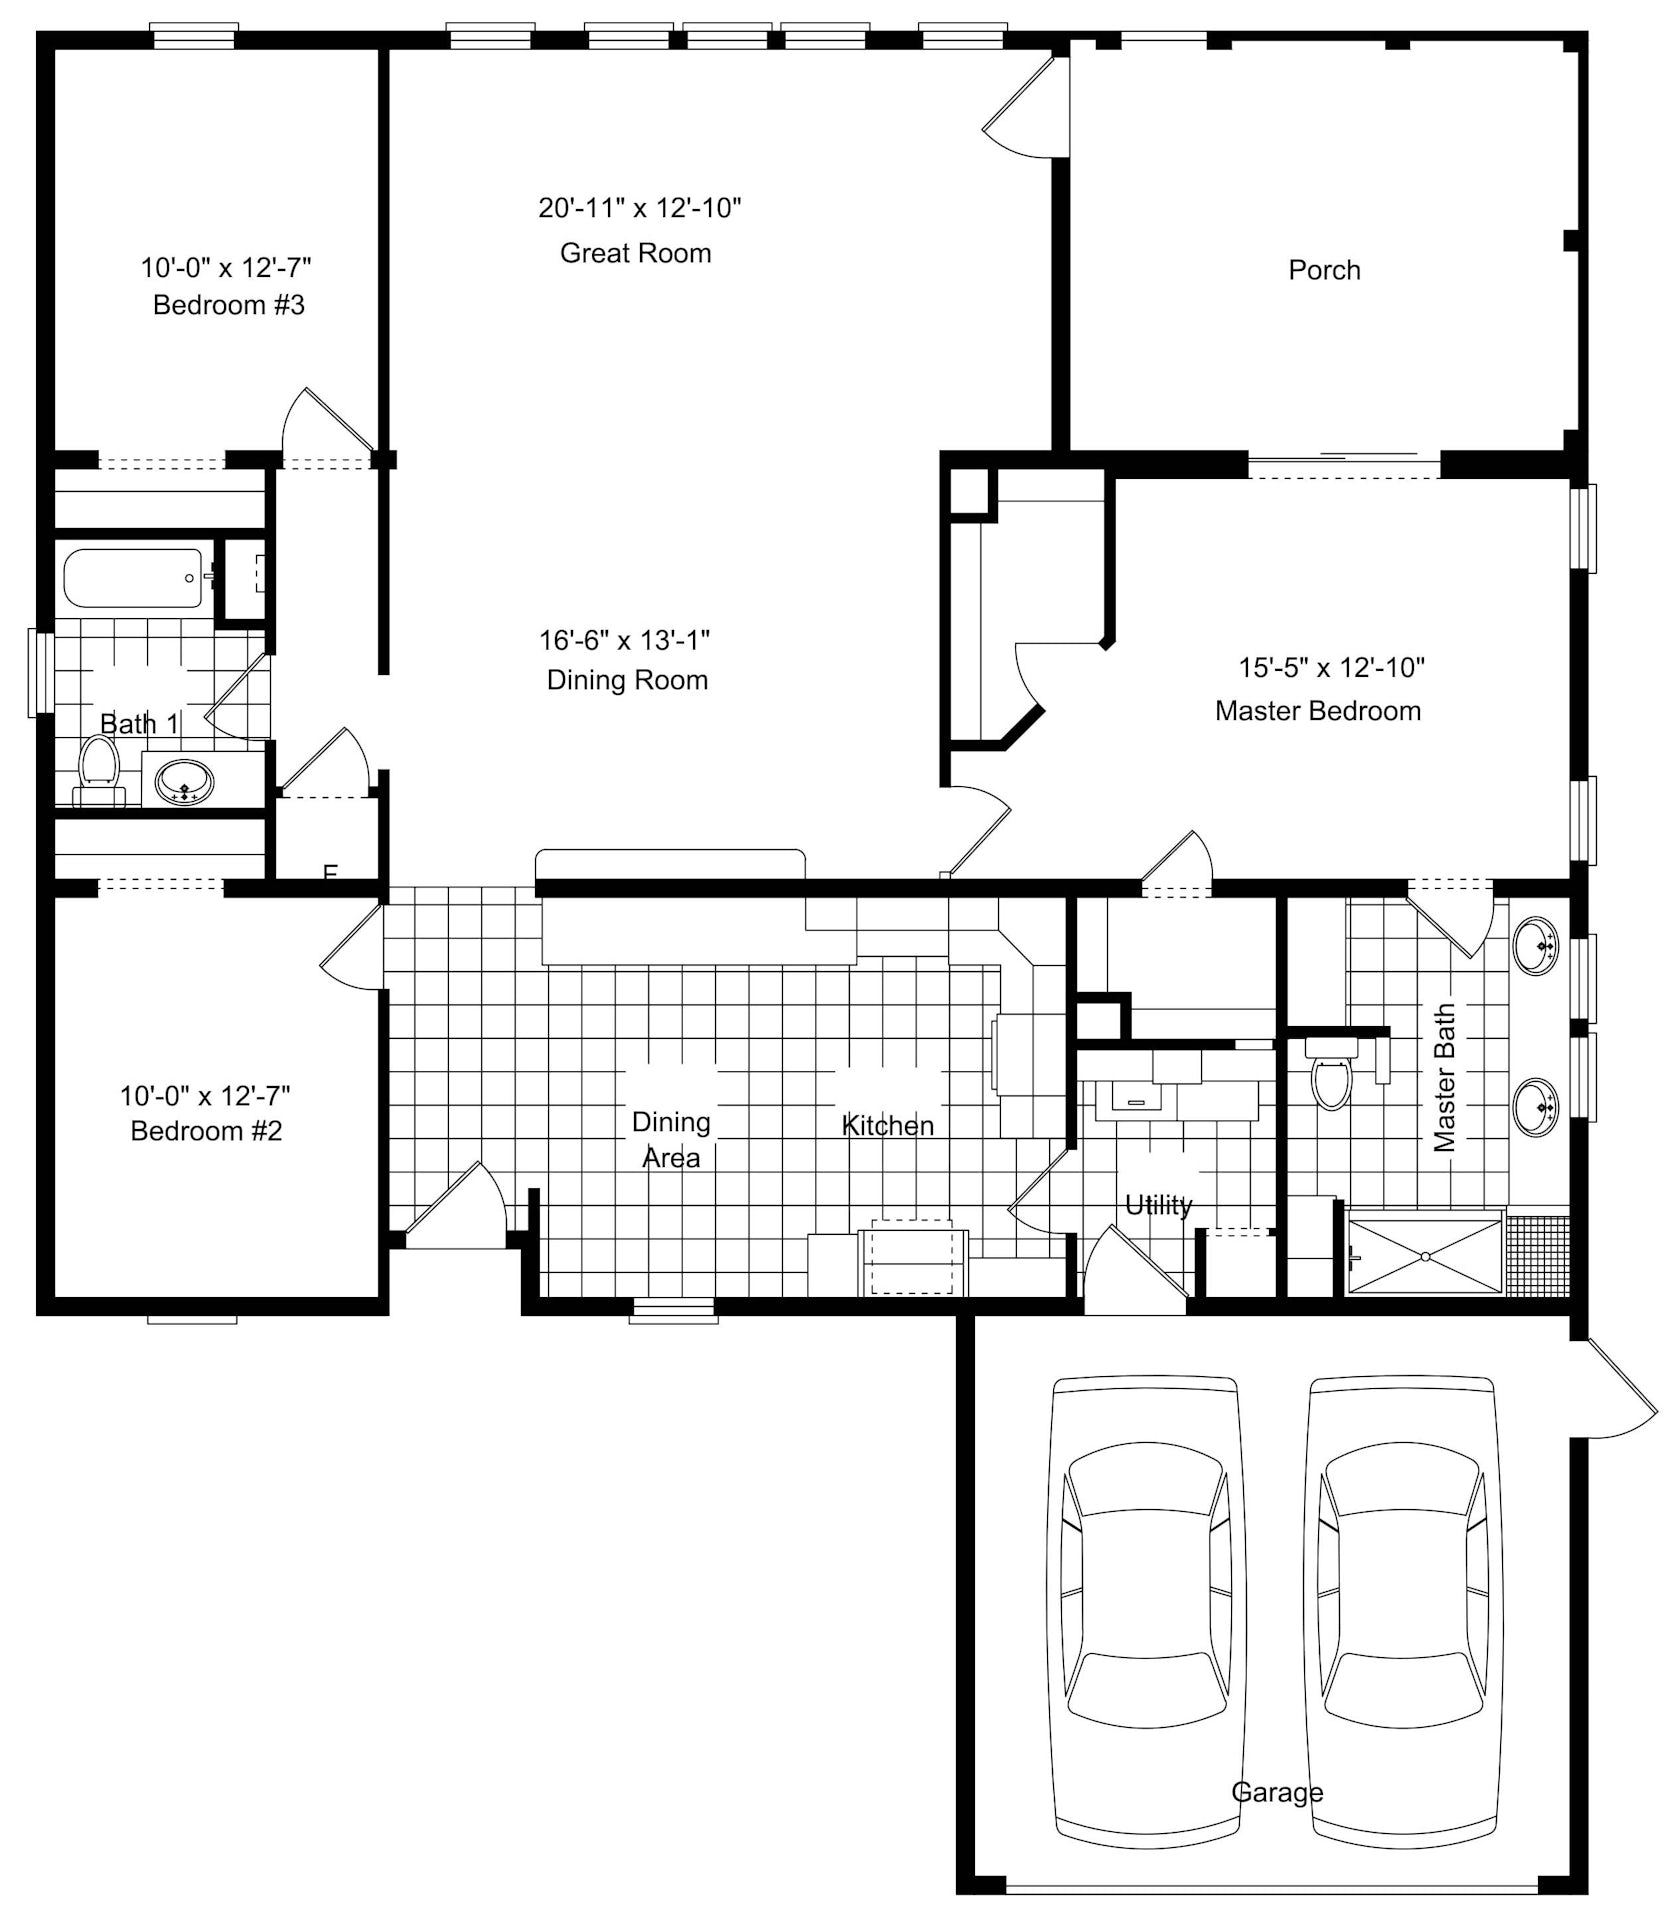 Free App To Draw Floor Plans floorplans.click